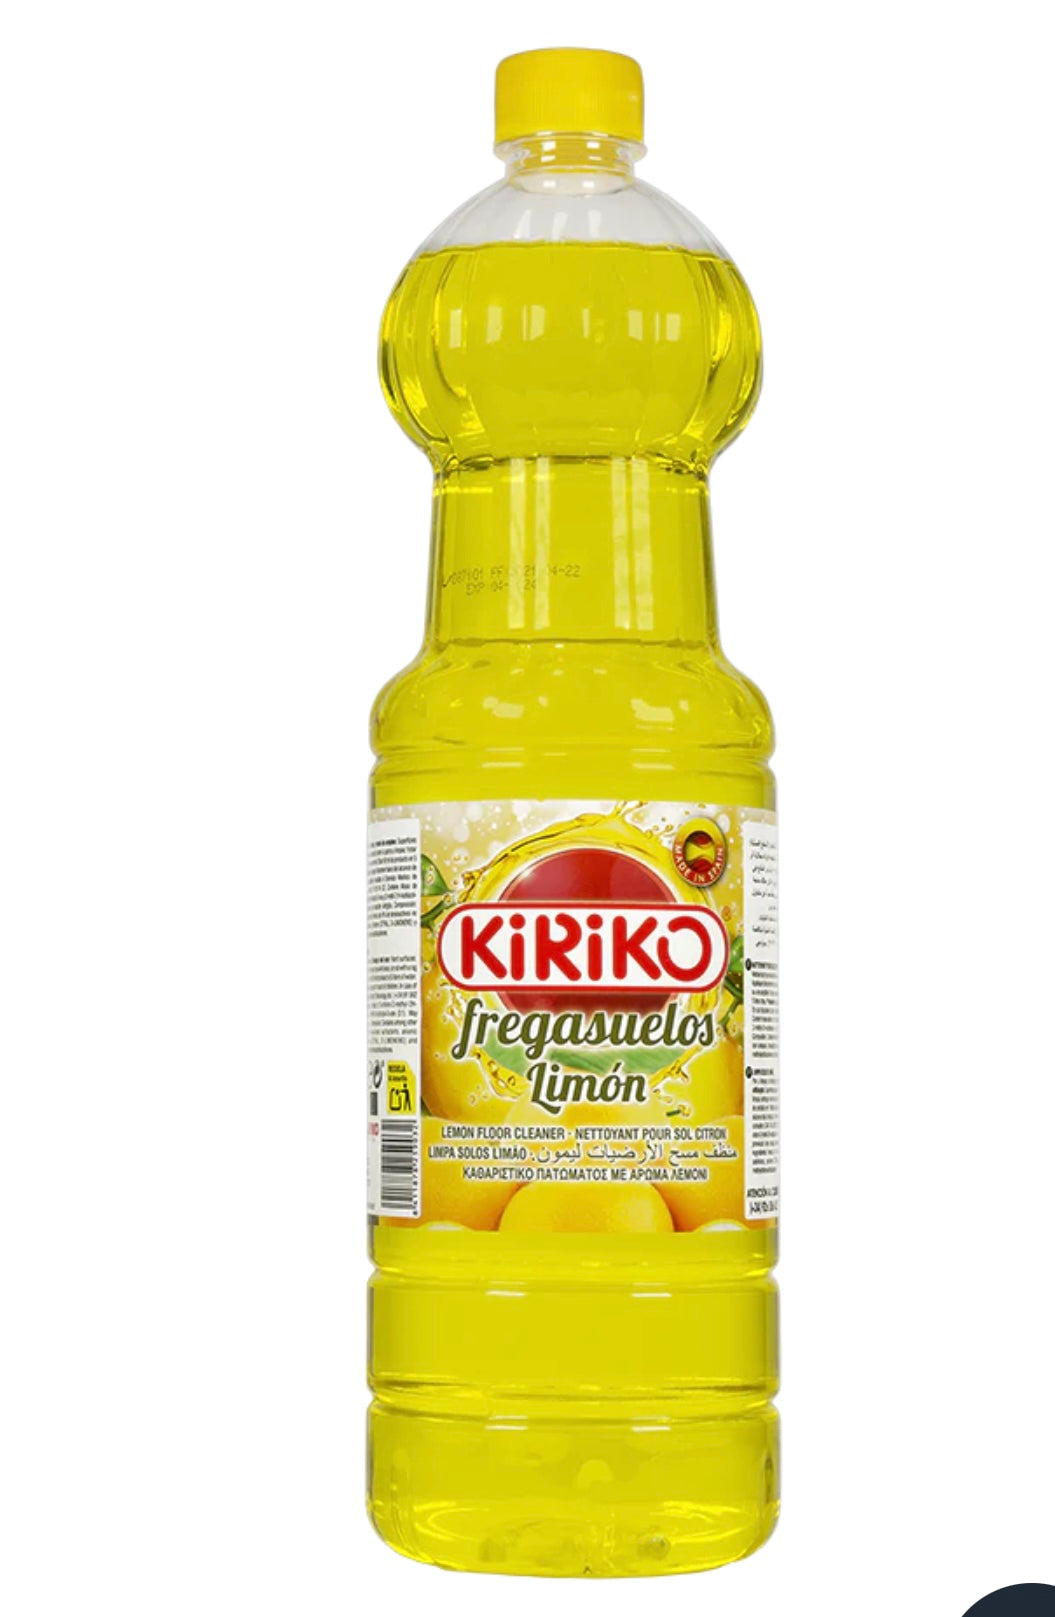 Kiriko Fregasuelos Limon Floor Cleaner